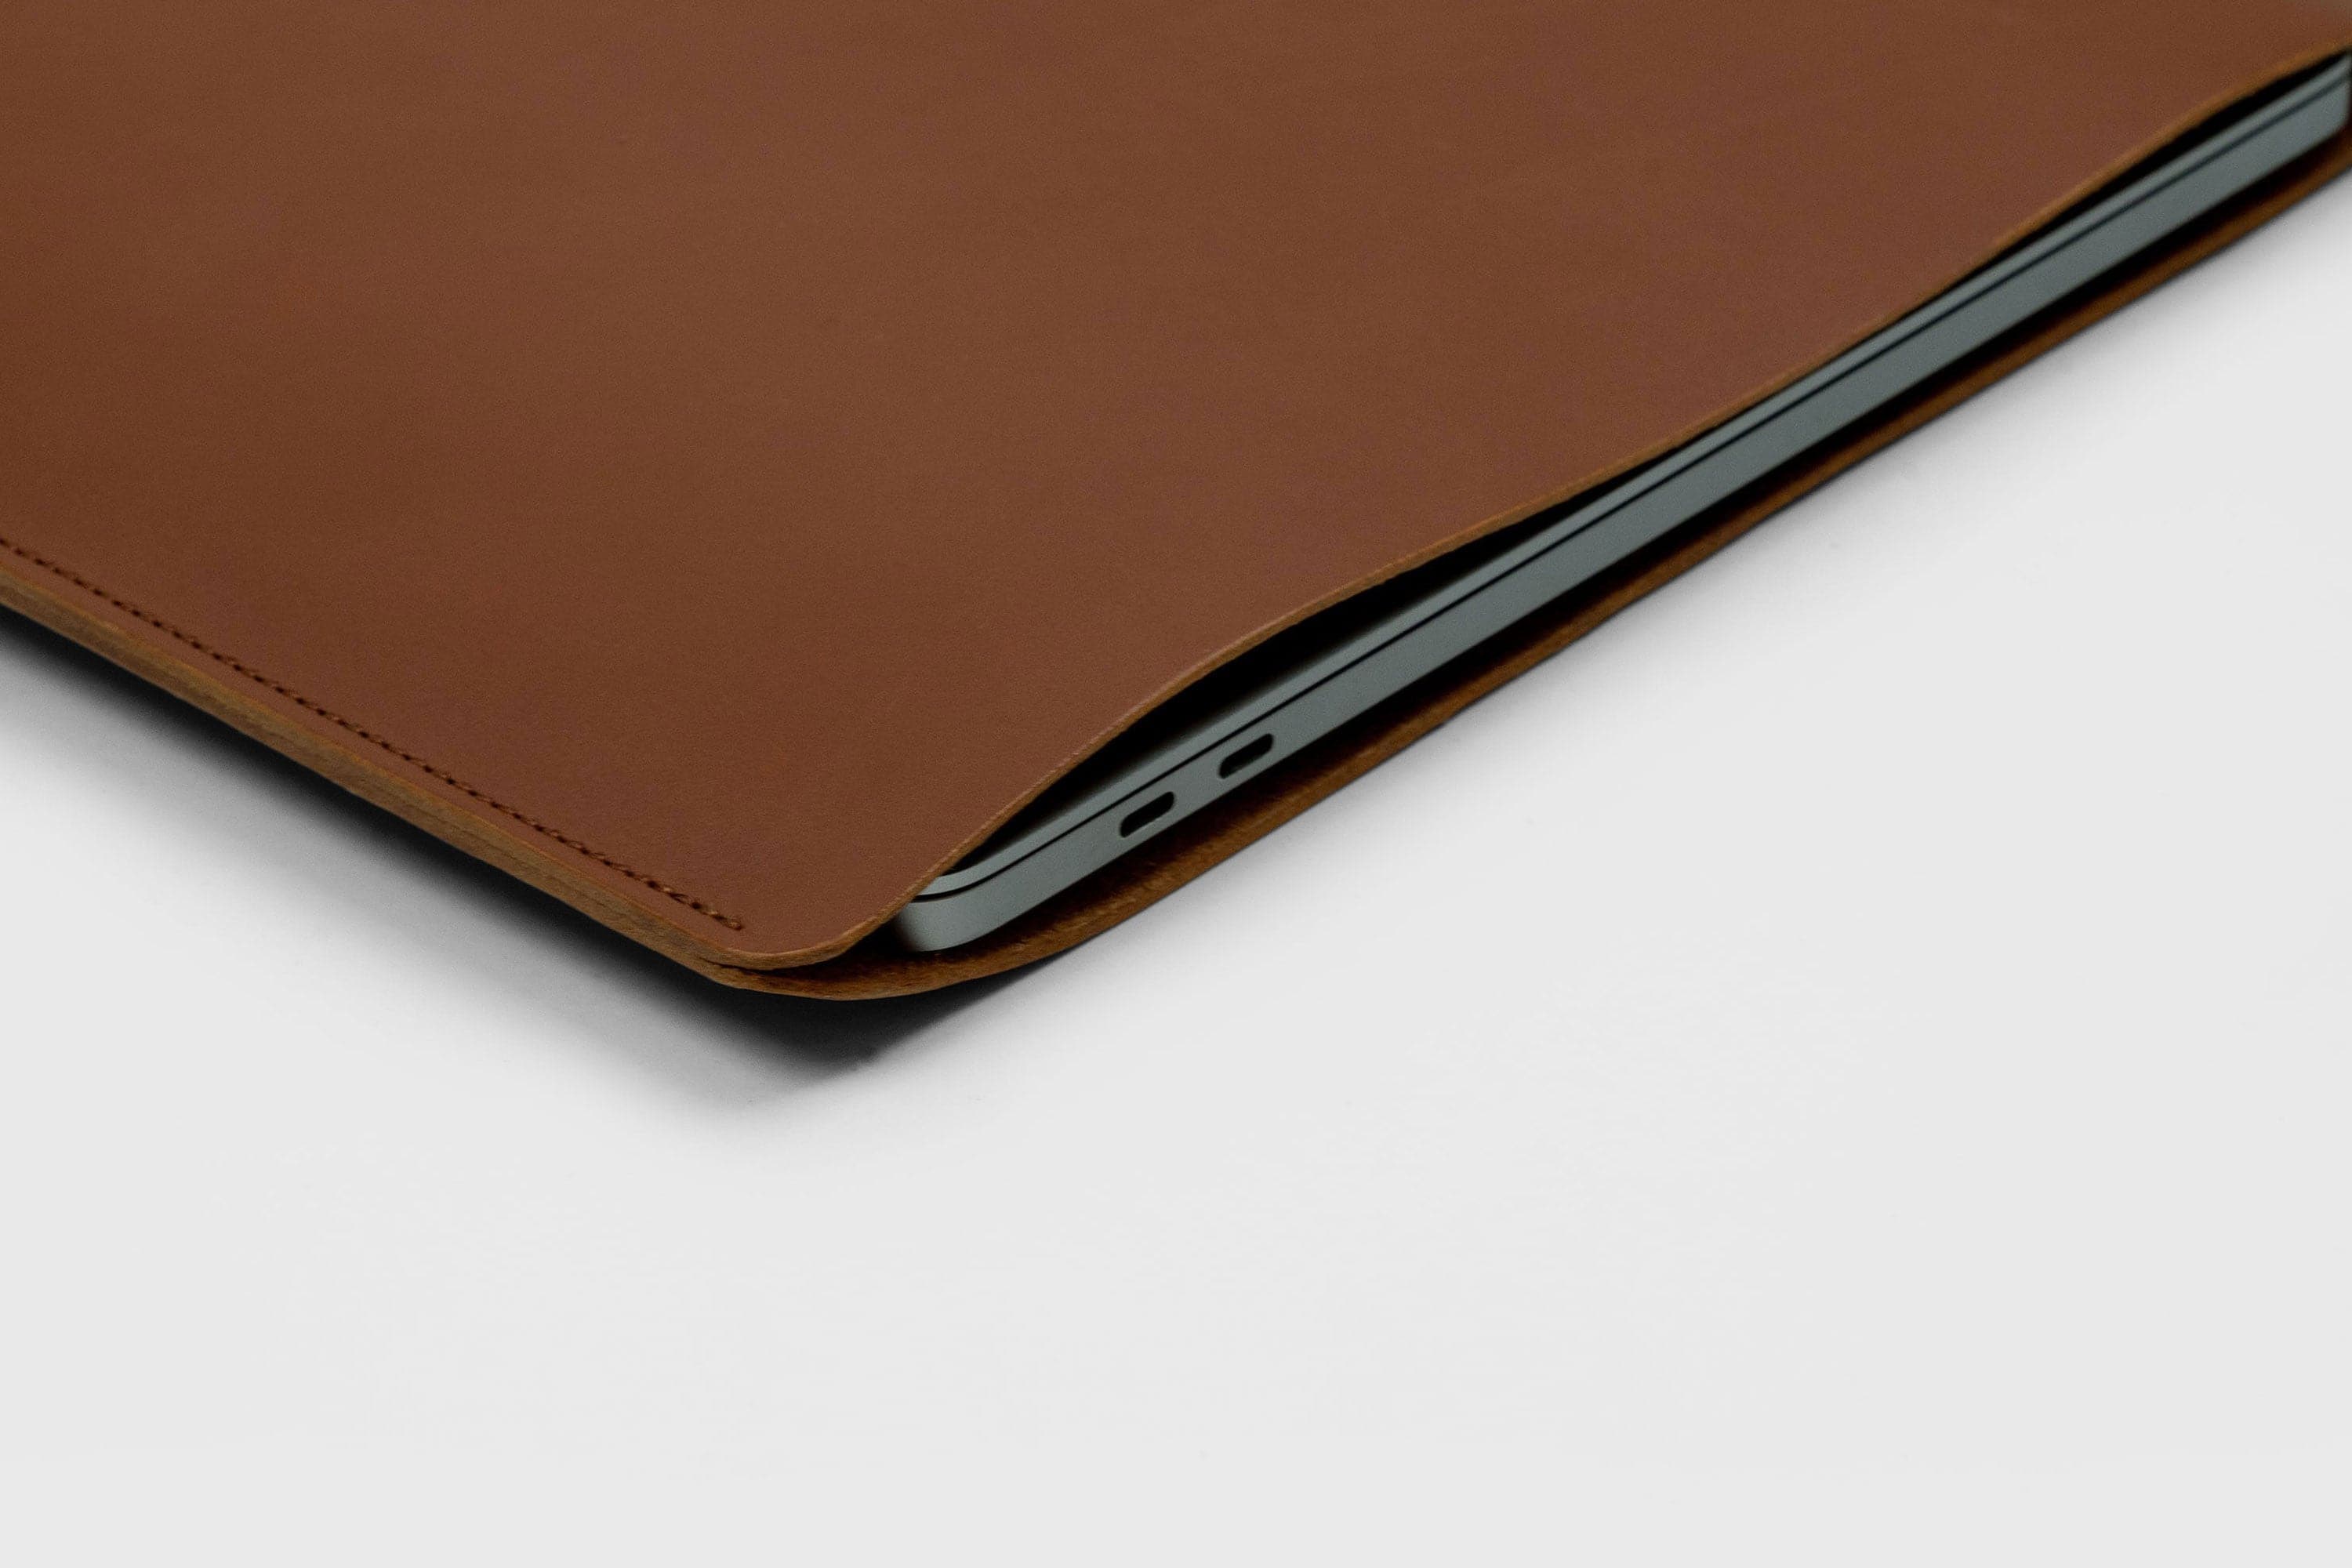 MacBook Pro 14 Inch Sleeve Leather Dark Brown Vachetta Vegetable Tanned Leather Design Manuel Dreesmann Atelier Madre Barcelona Spain